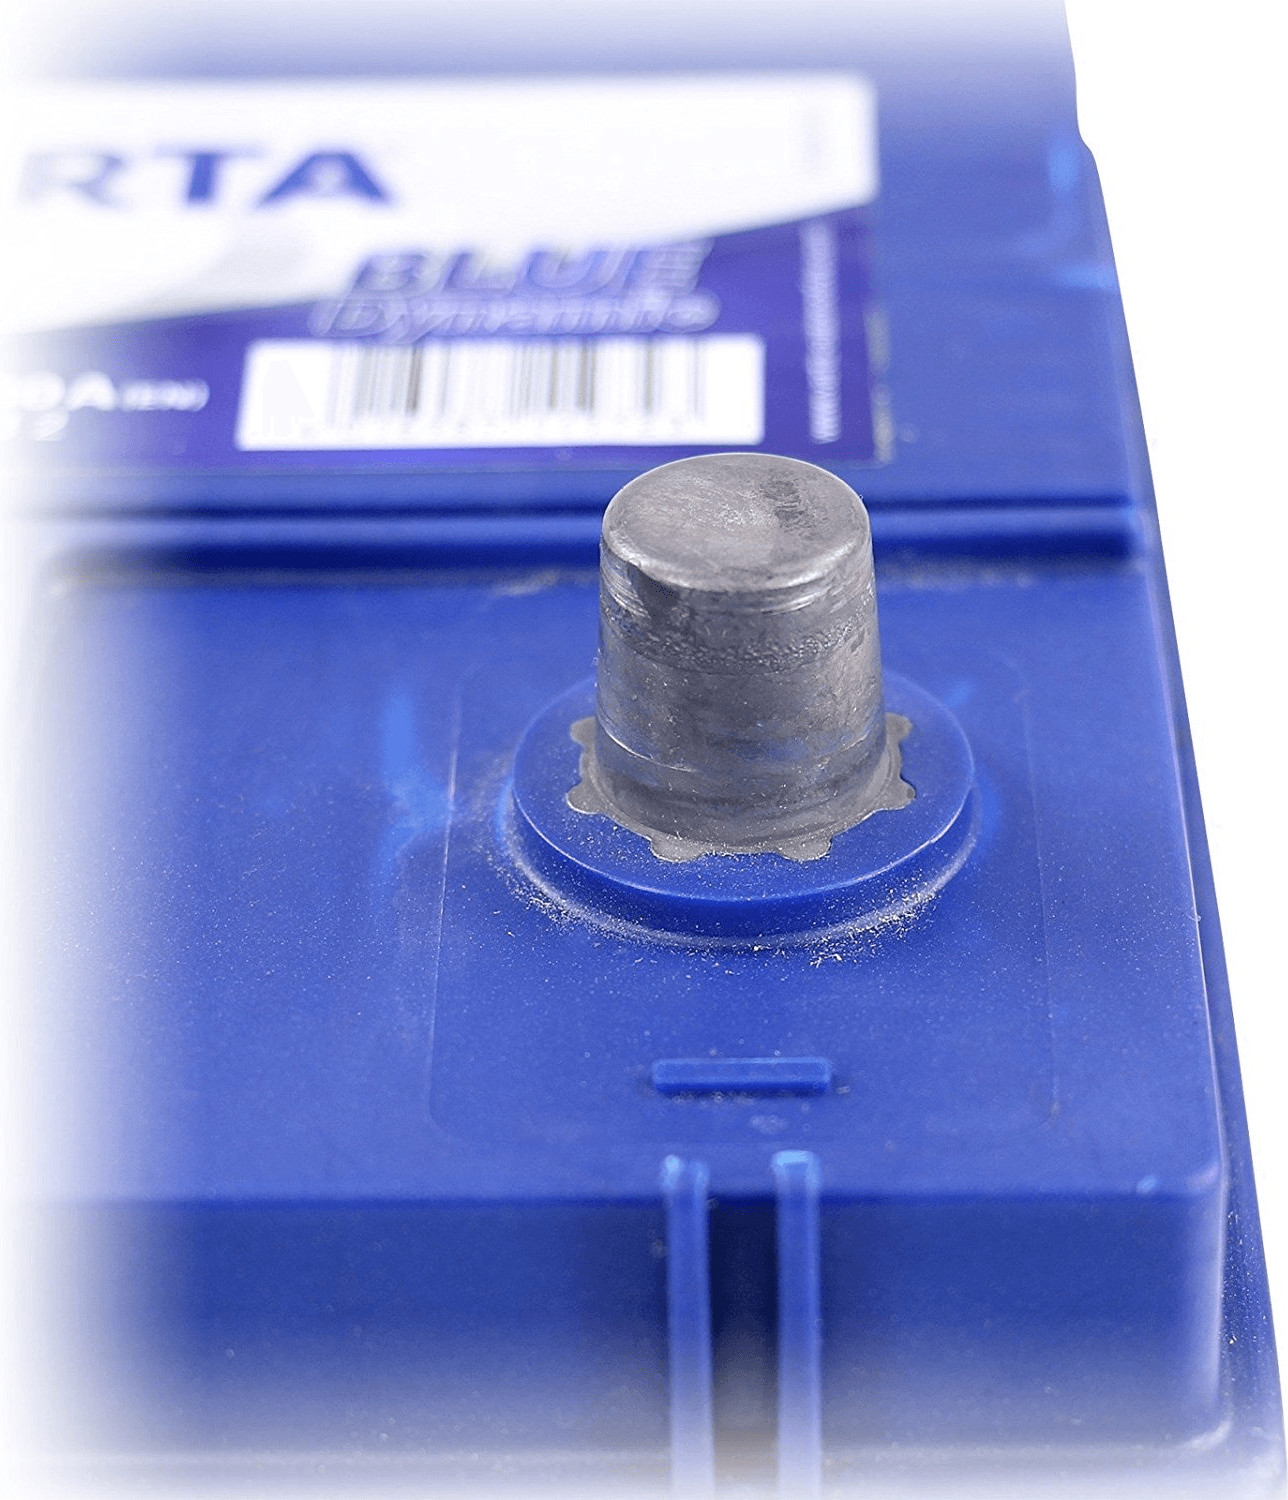 Varta G7 - Autobatterie Blue Dynamic 12V / 95Ah / 830A, 113,95 €